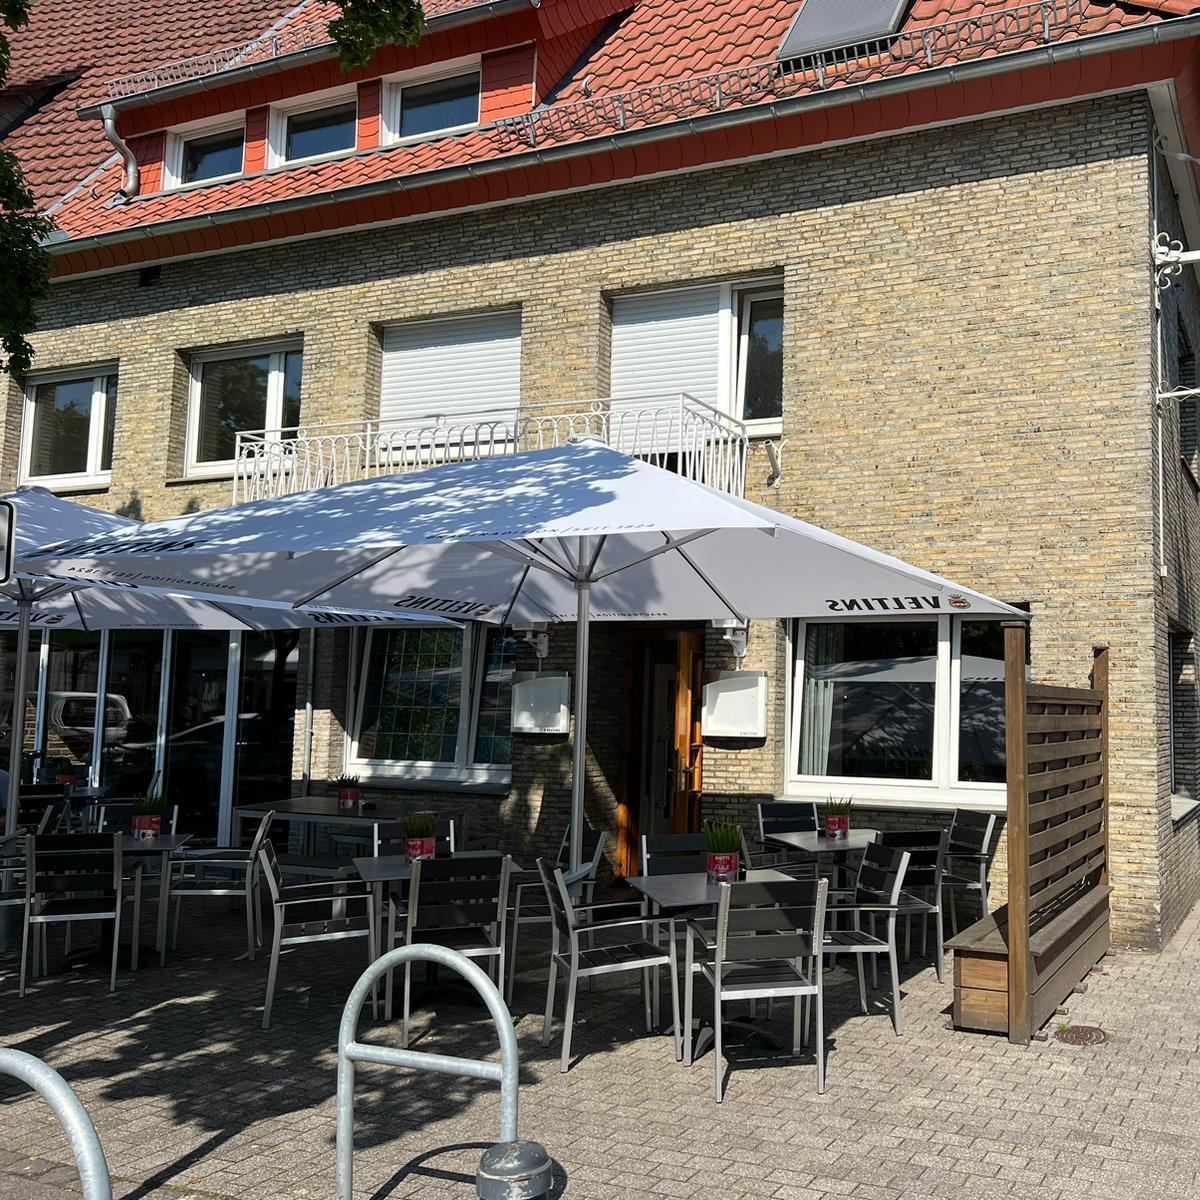 Restaurant "Pizzablitz  - Ristorante u. Pizzeria" in Verl